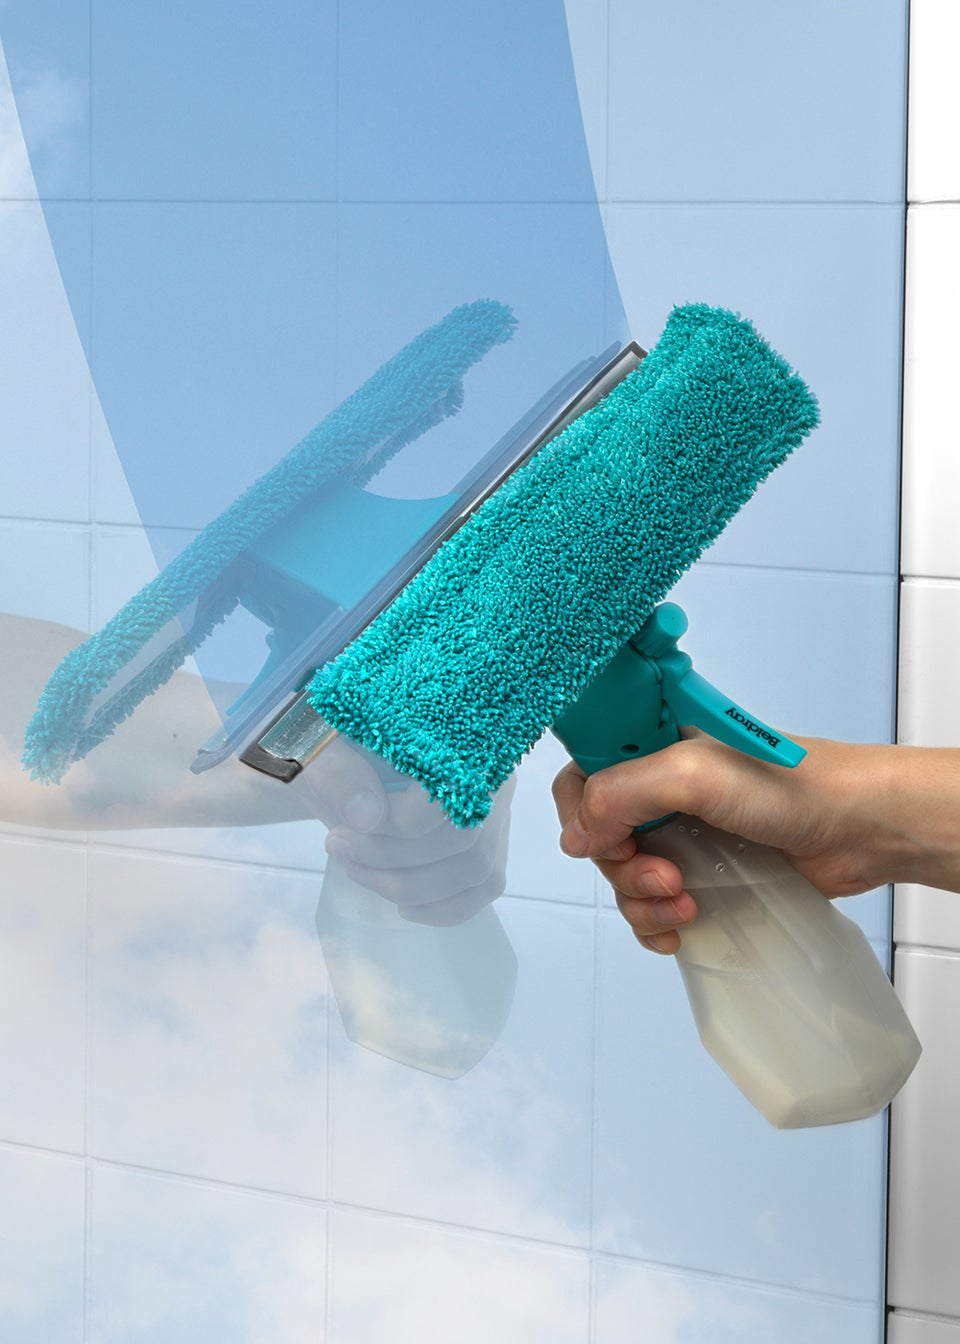 Beldray Spray Window Wiper (33cm x 26cm x 10cm)